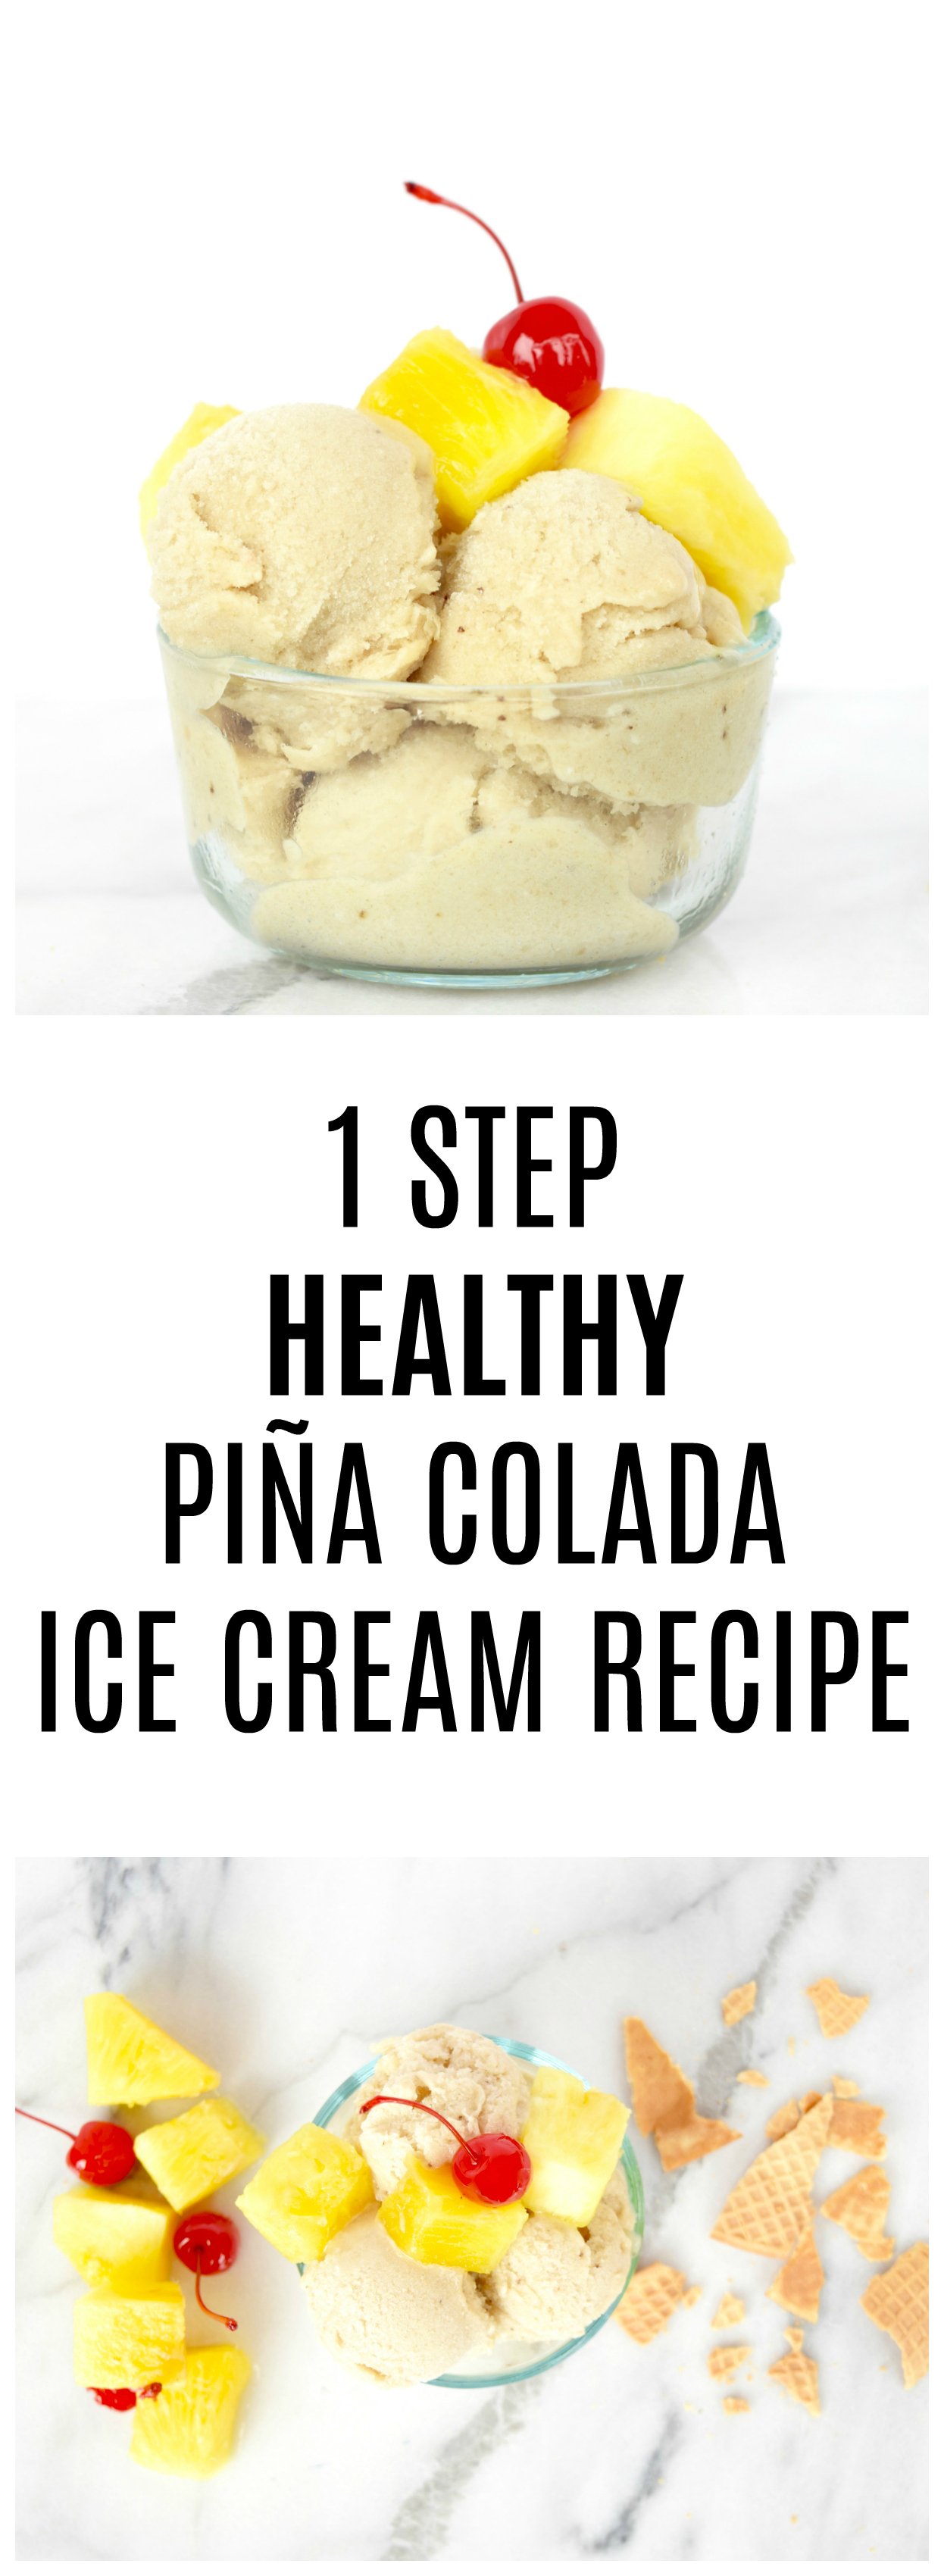 1 STEP HEALTHY PINA COLADA ICE CREAM RECIPE